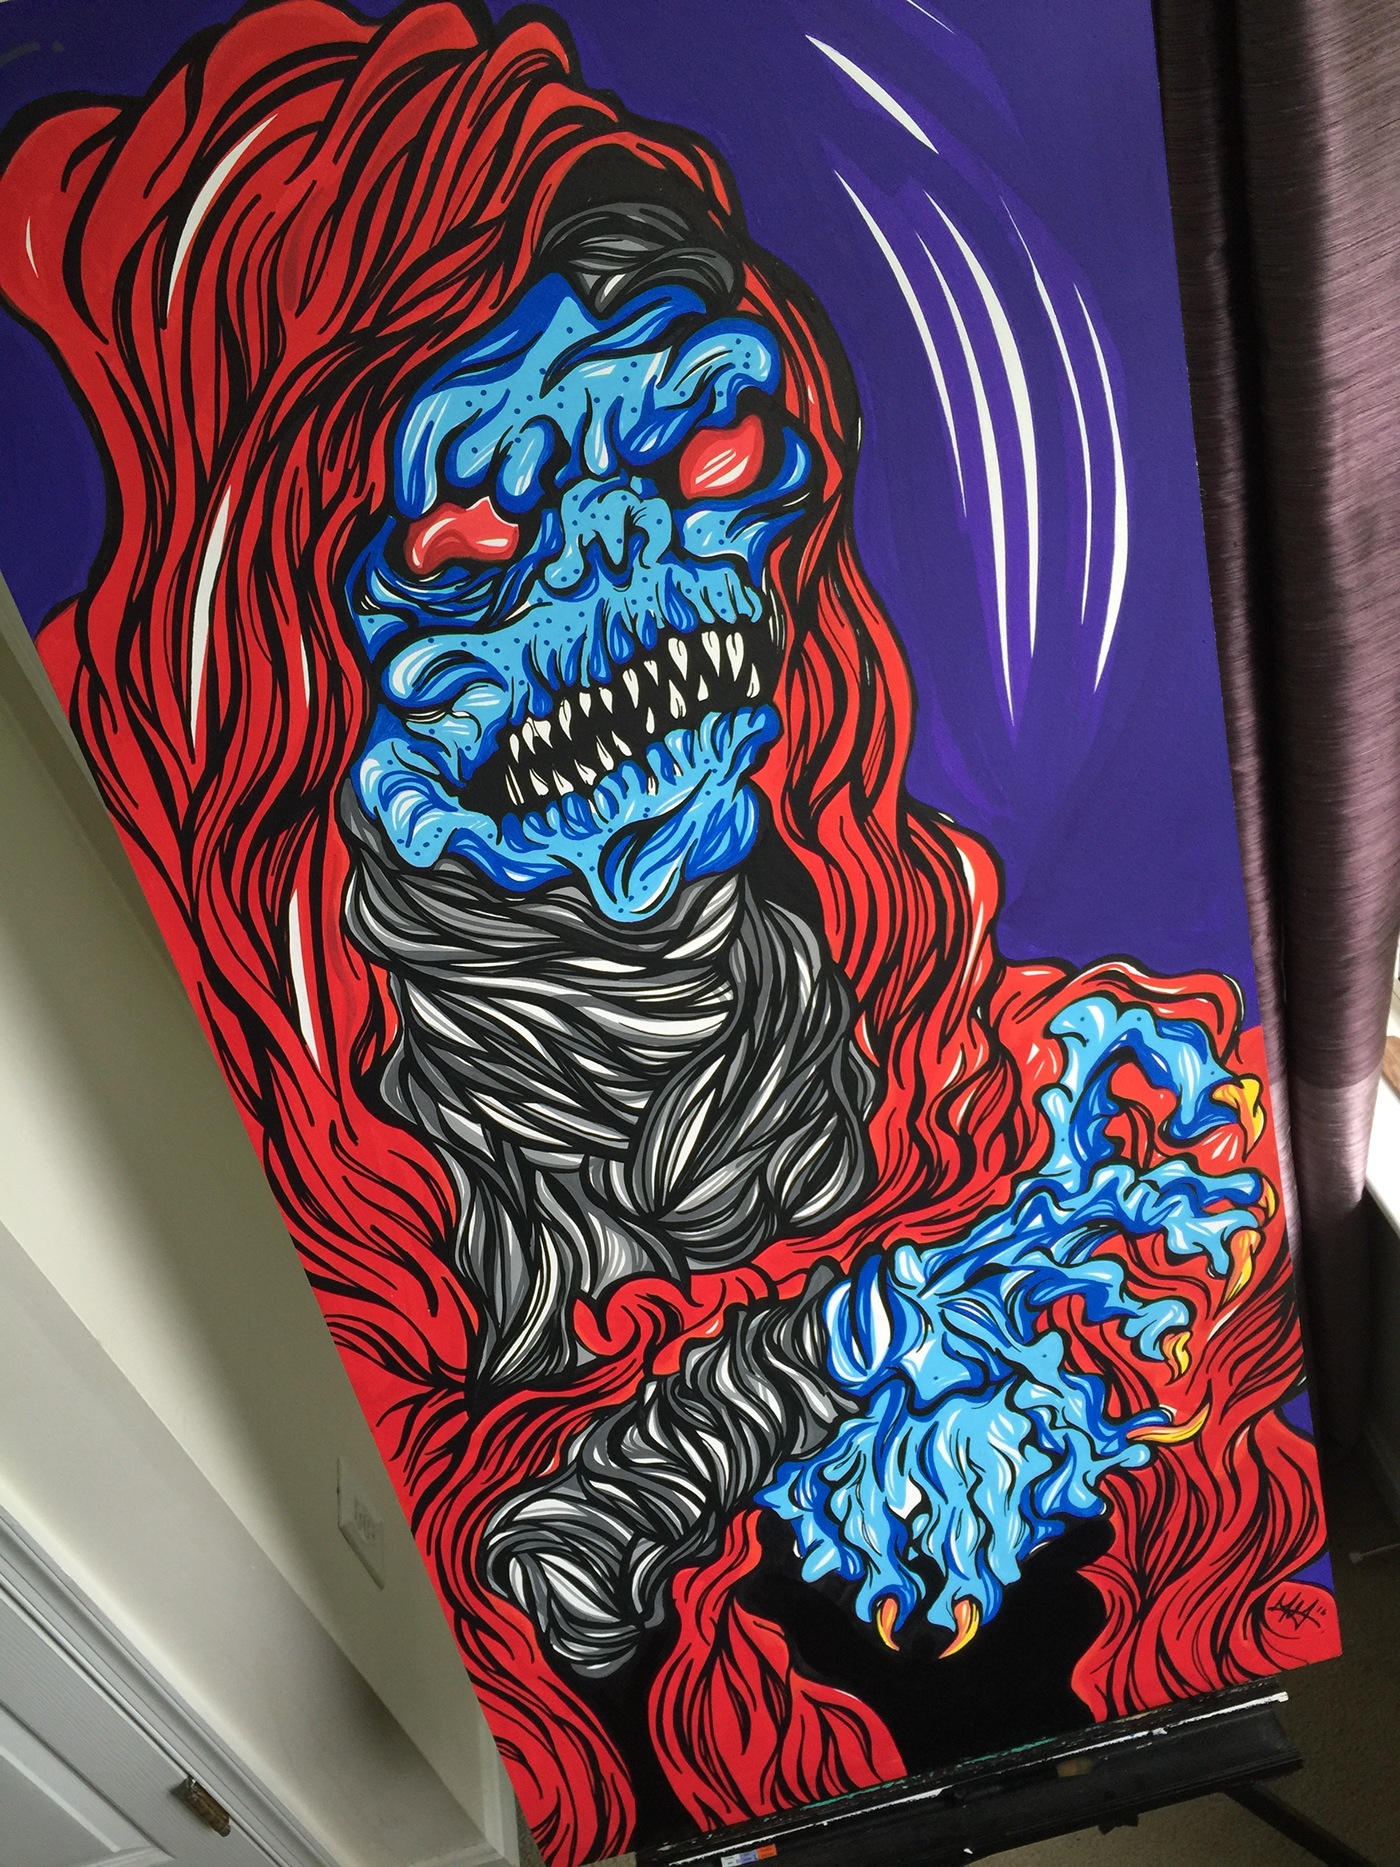 mummra thundercats demon Spirits evil Ancient zombie mummy nightmaremikey Posca Marker acrylic paint